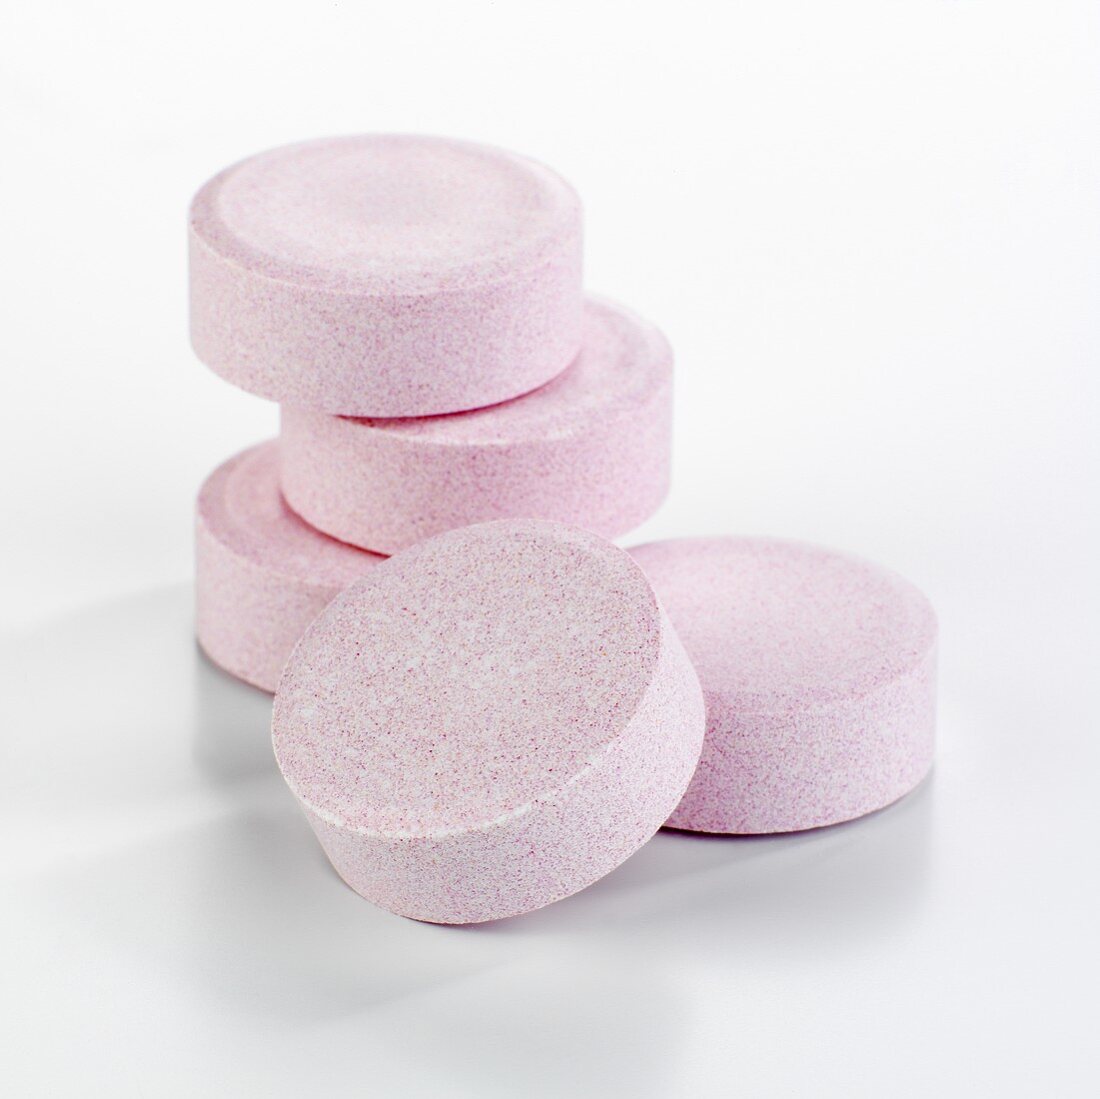 Five effervescent magnesium tablets